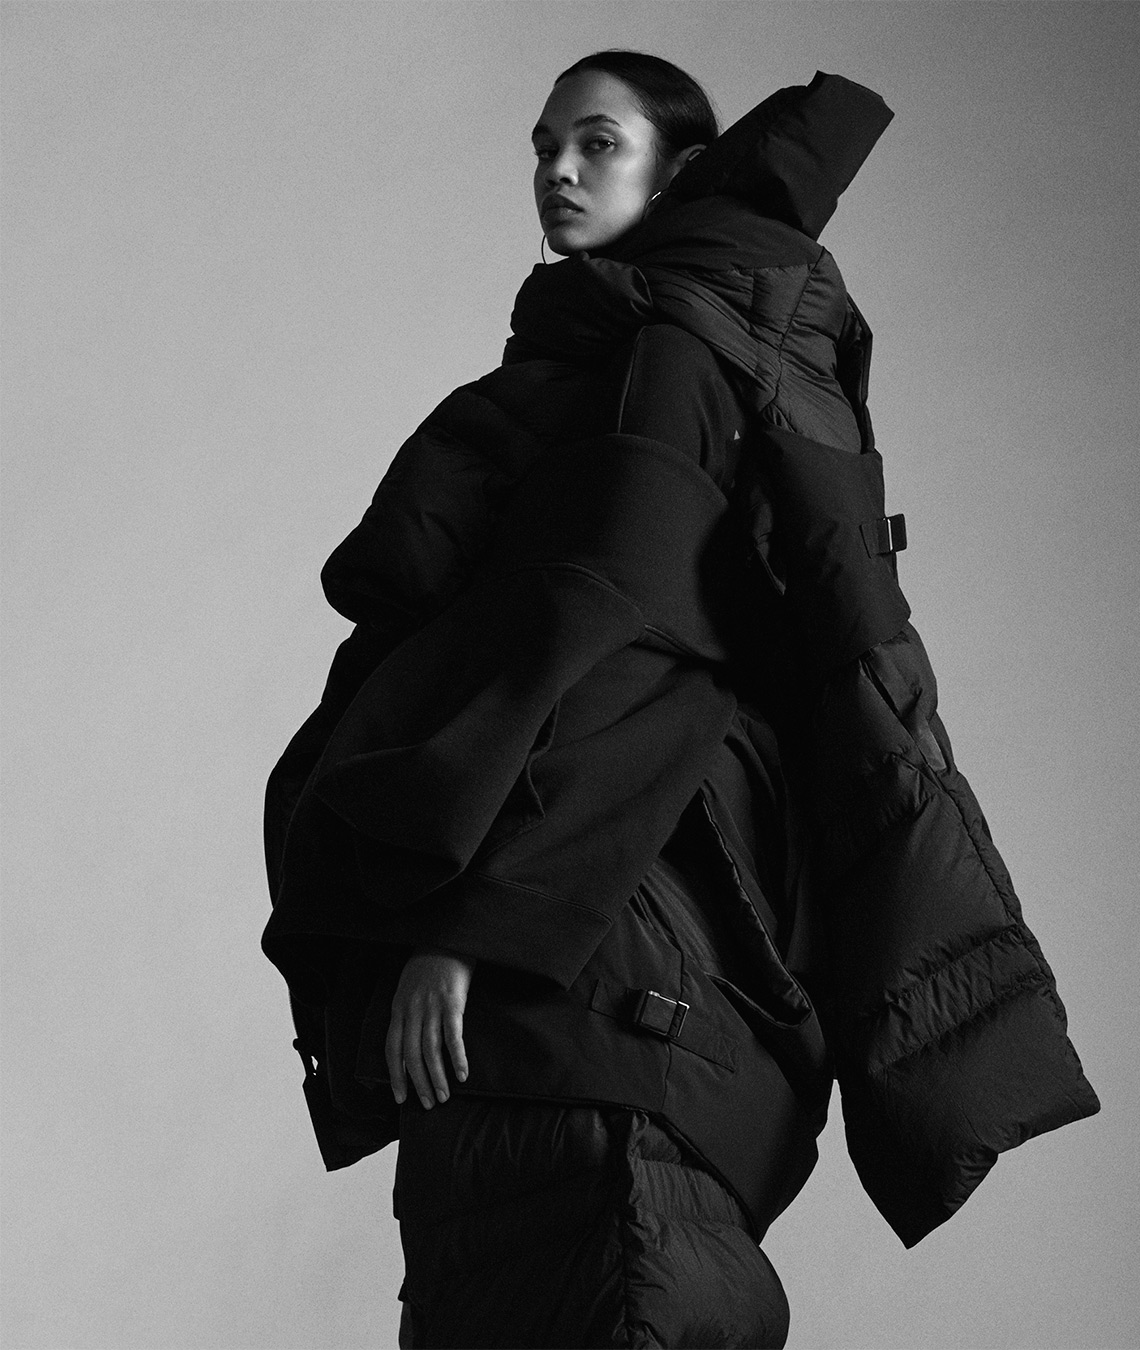 Pharrell adidas Hu Triple Black Collection Release | SneakerNews.com